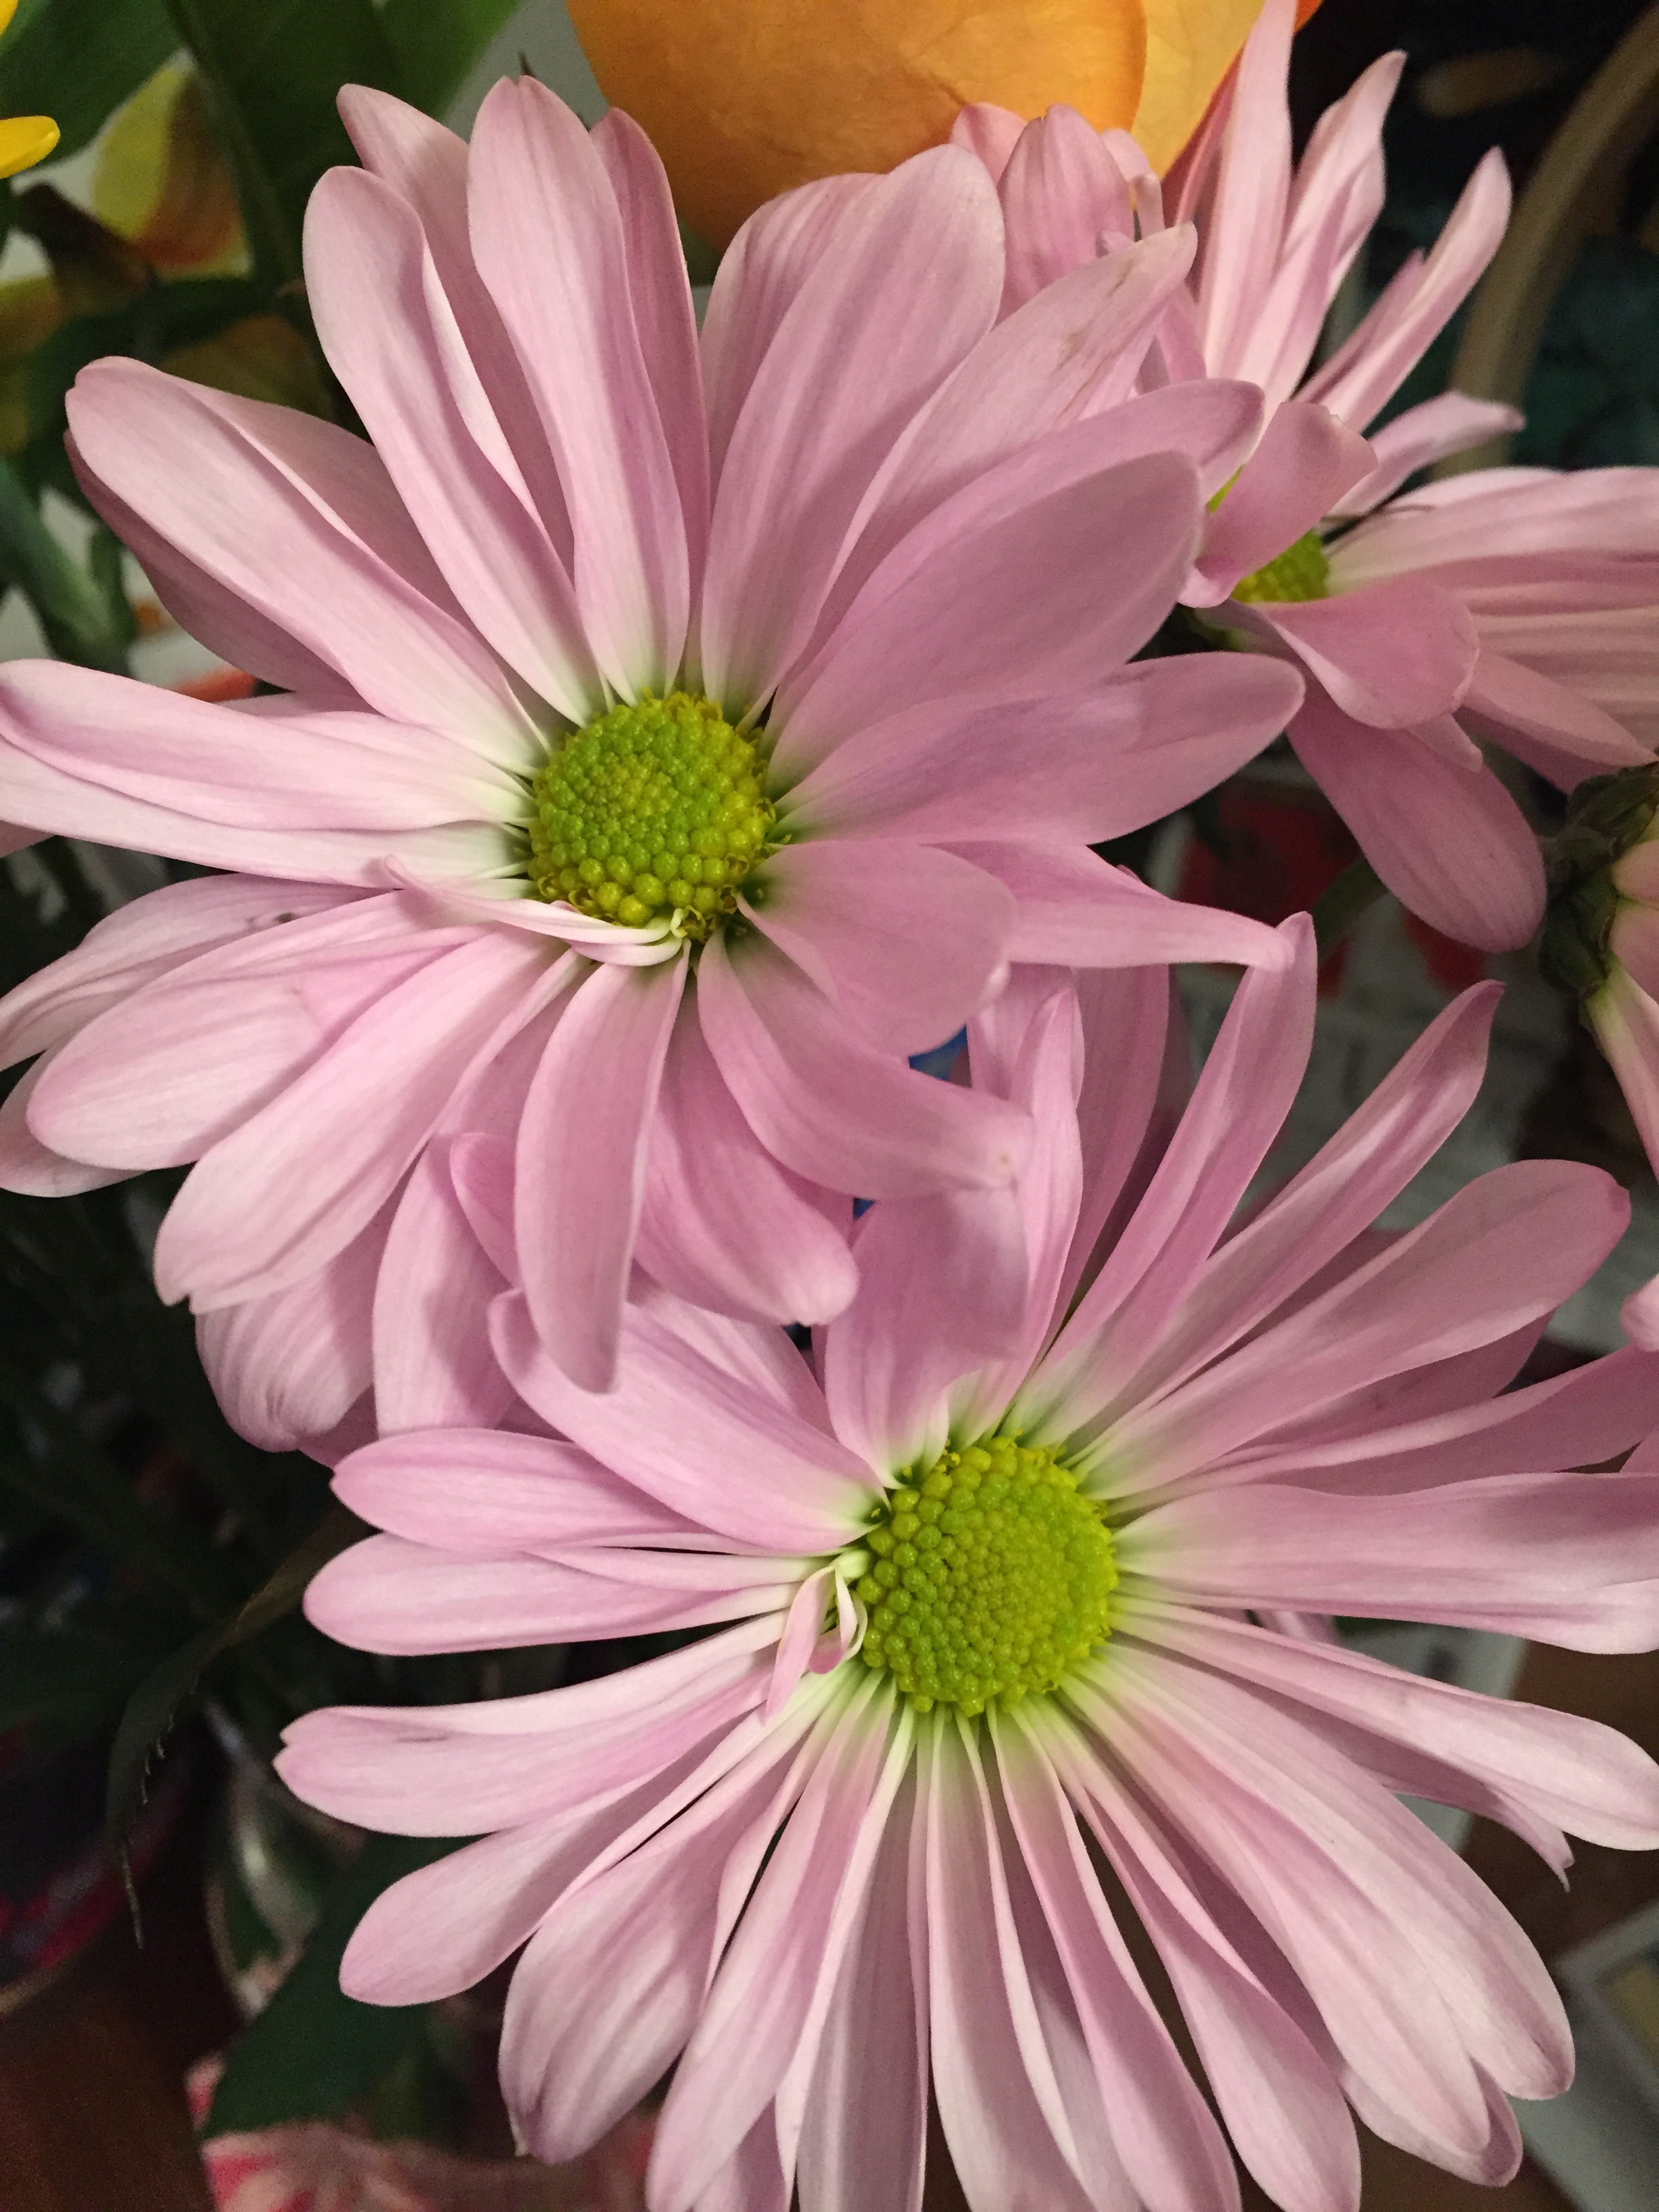 Fresh-Cut Flowers for the Week | Terri's Notebook